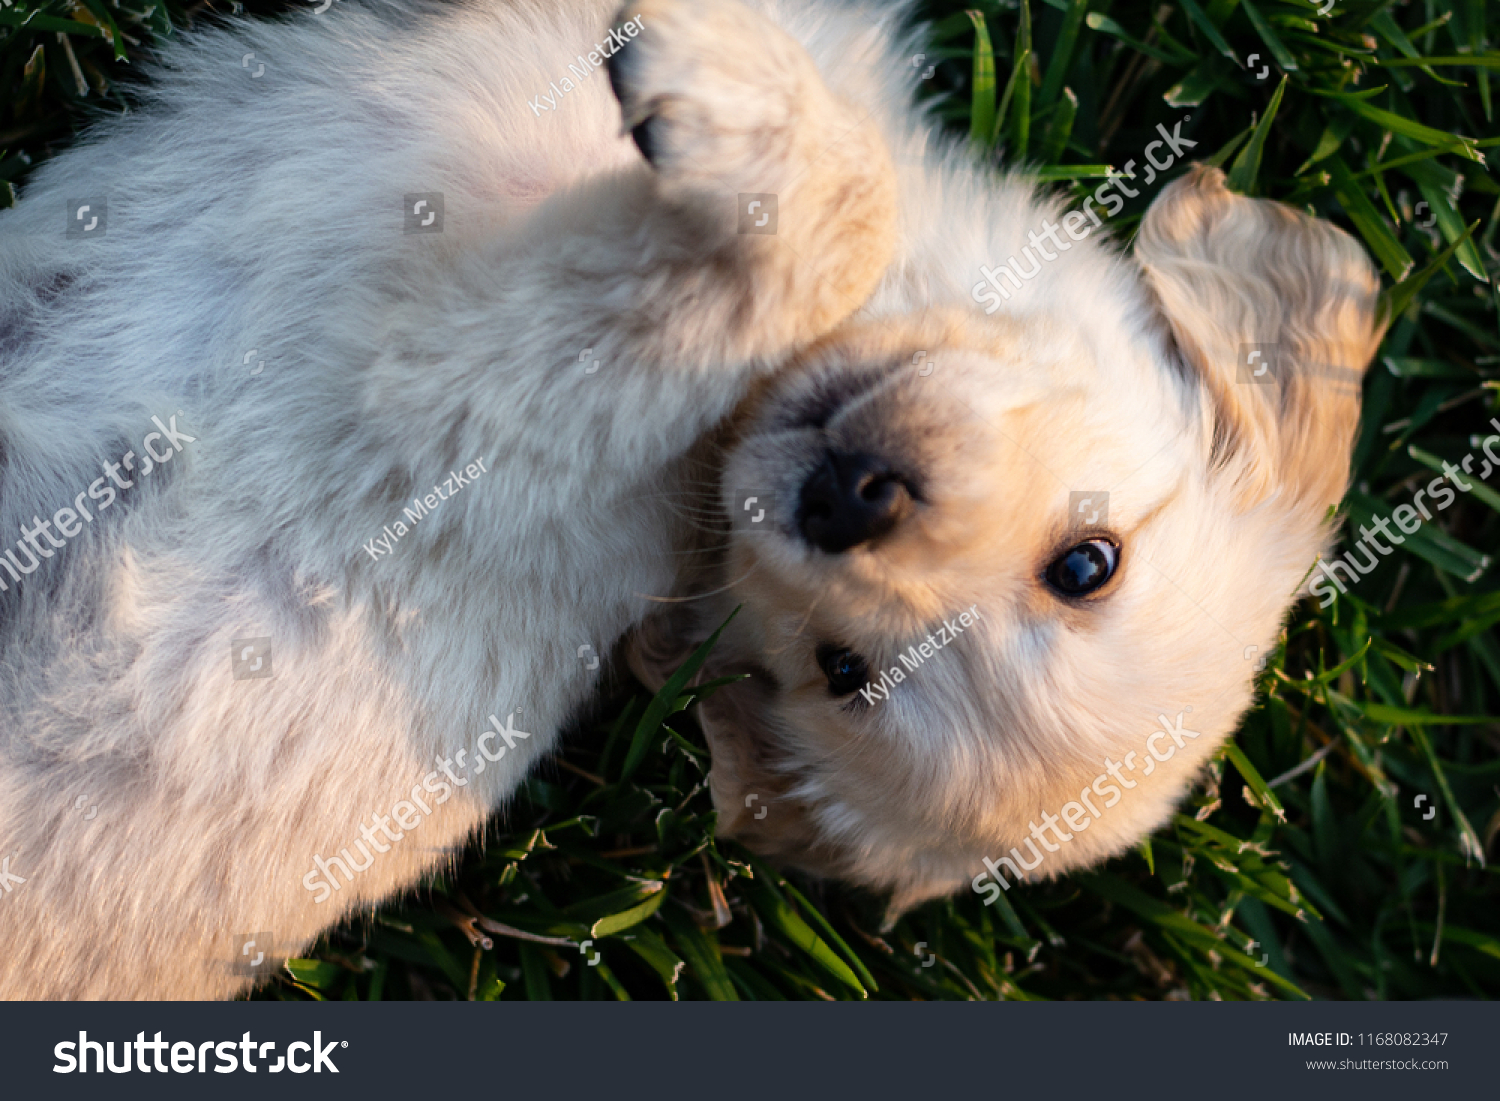 8 Week Old Golden Retriever Puppy Stock Image Download Now